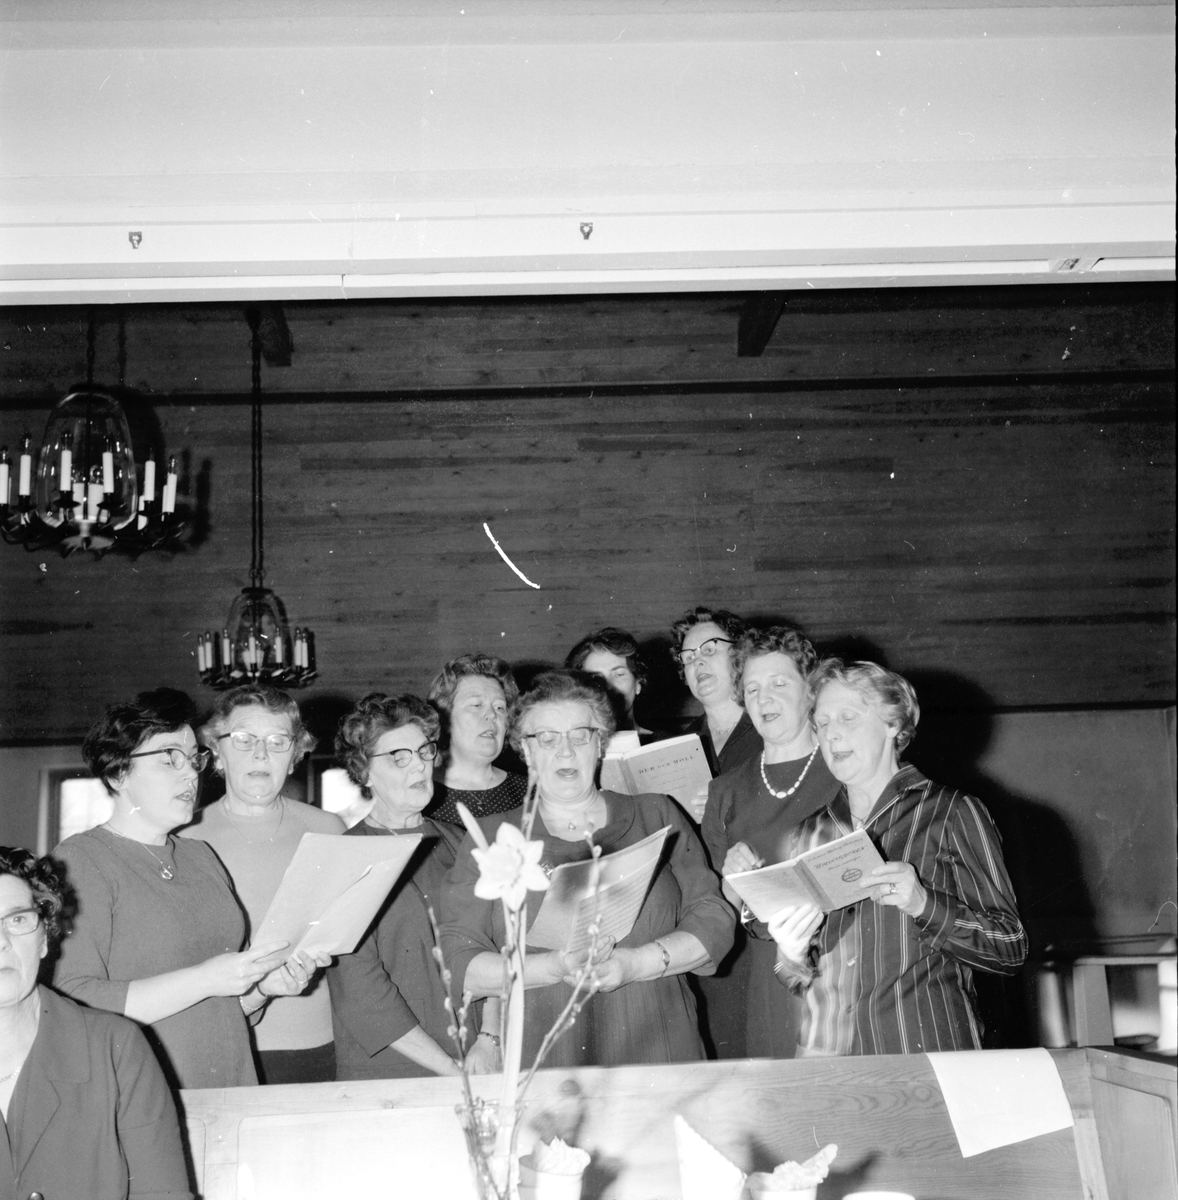 Vallviks kyrksal,
Syföreningsmöte,
23 Februari 1965